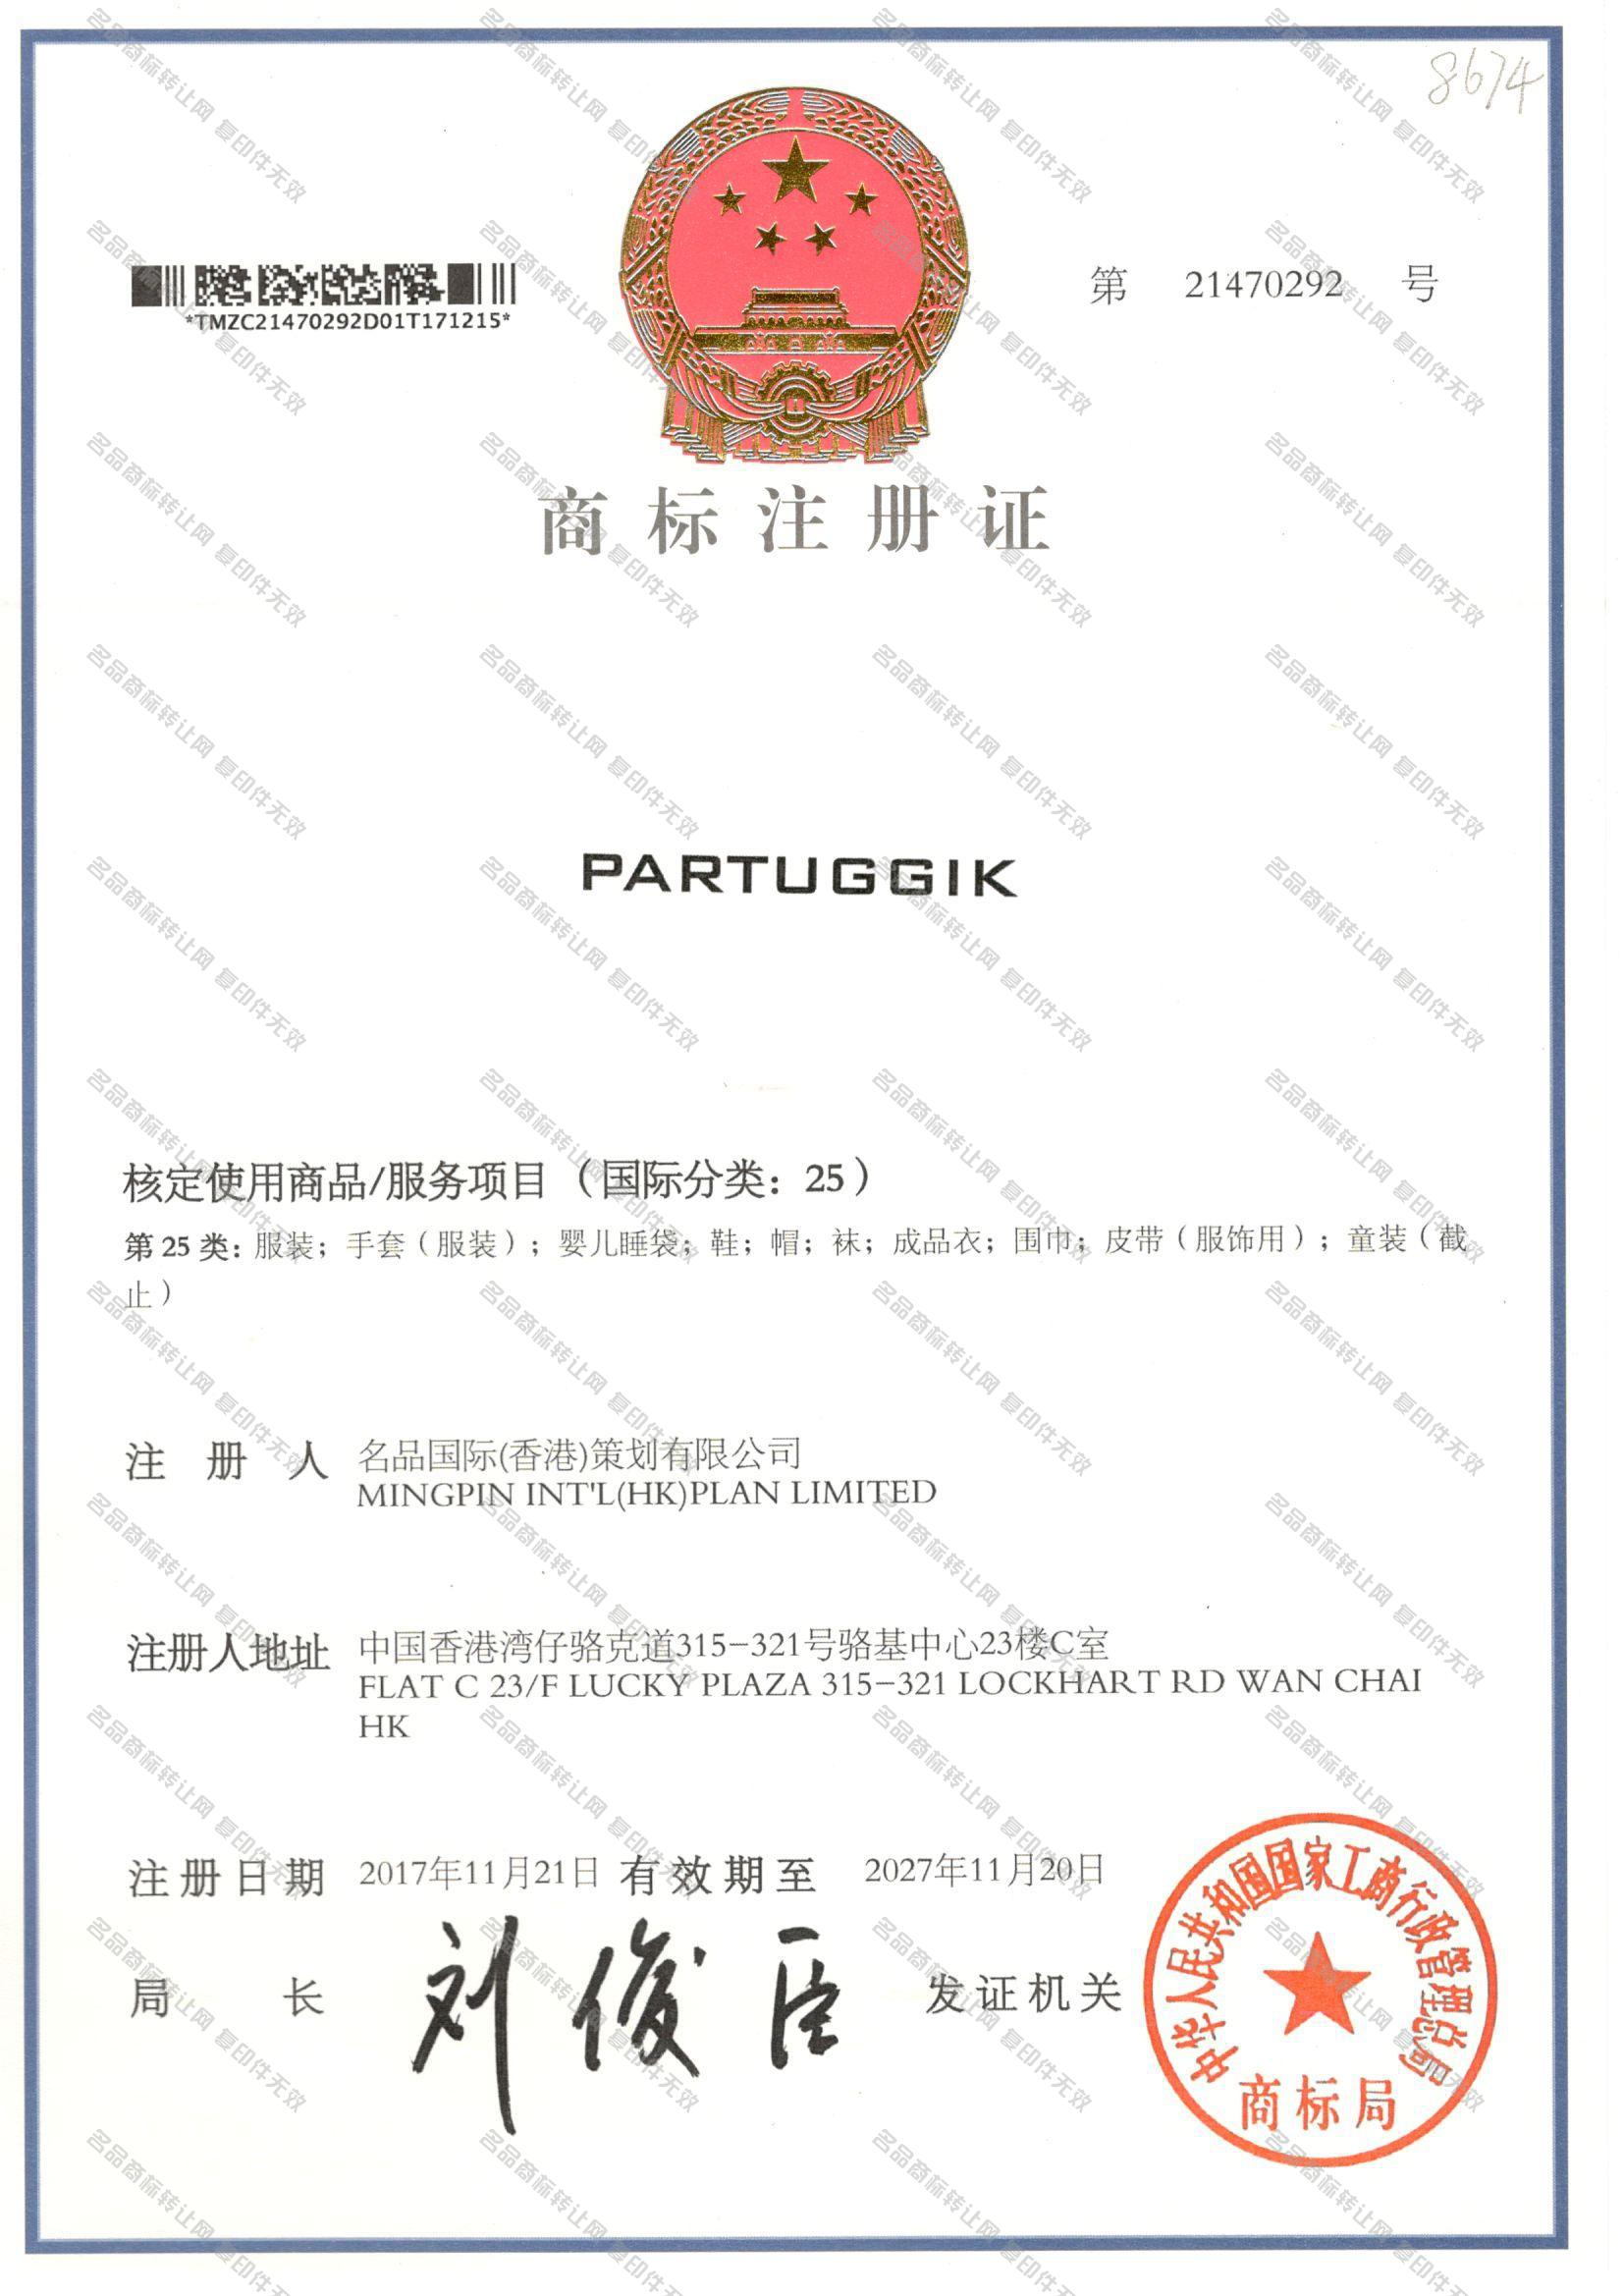 PARTUGGIK注册证